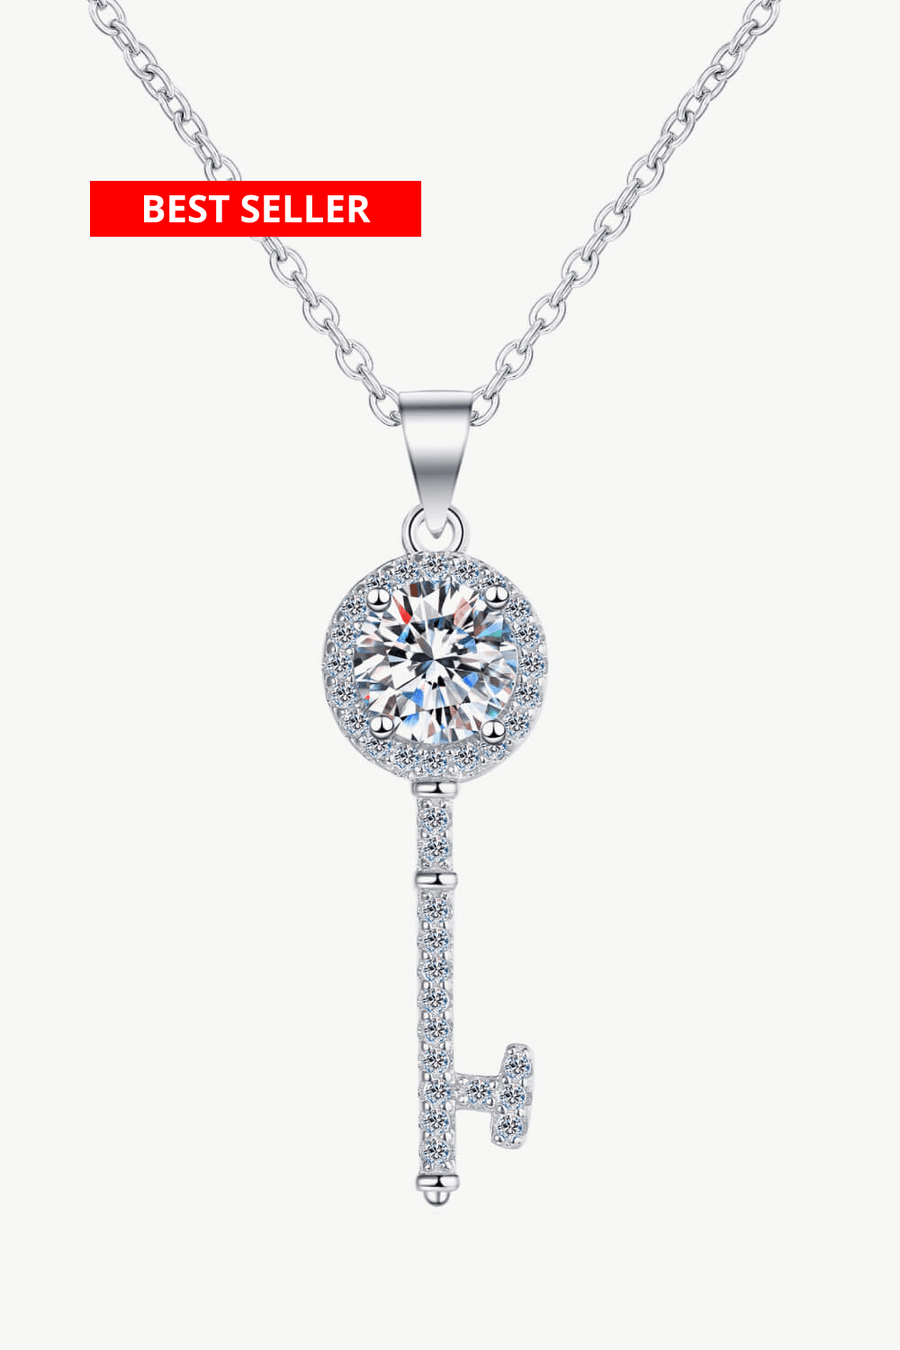 1# BEST Diamond Key Pendant Necklace Jewelry Gifts for Women | #1 Best Most Top Trendy Trending 1 Carat Diamond Key Pendant Necklace Gift for Women, Ladies | MASON New York